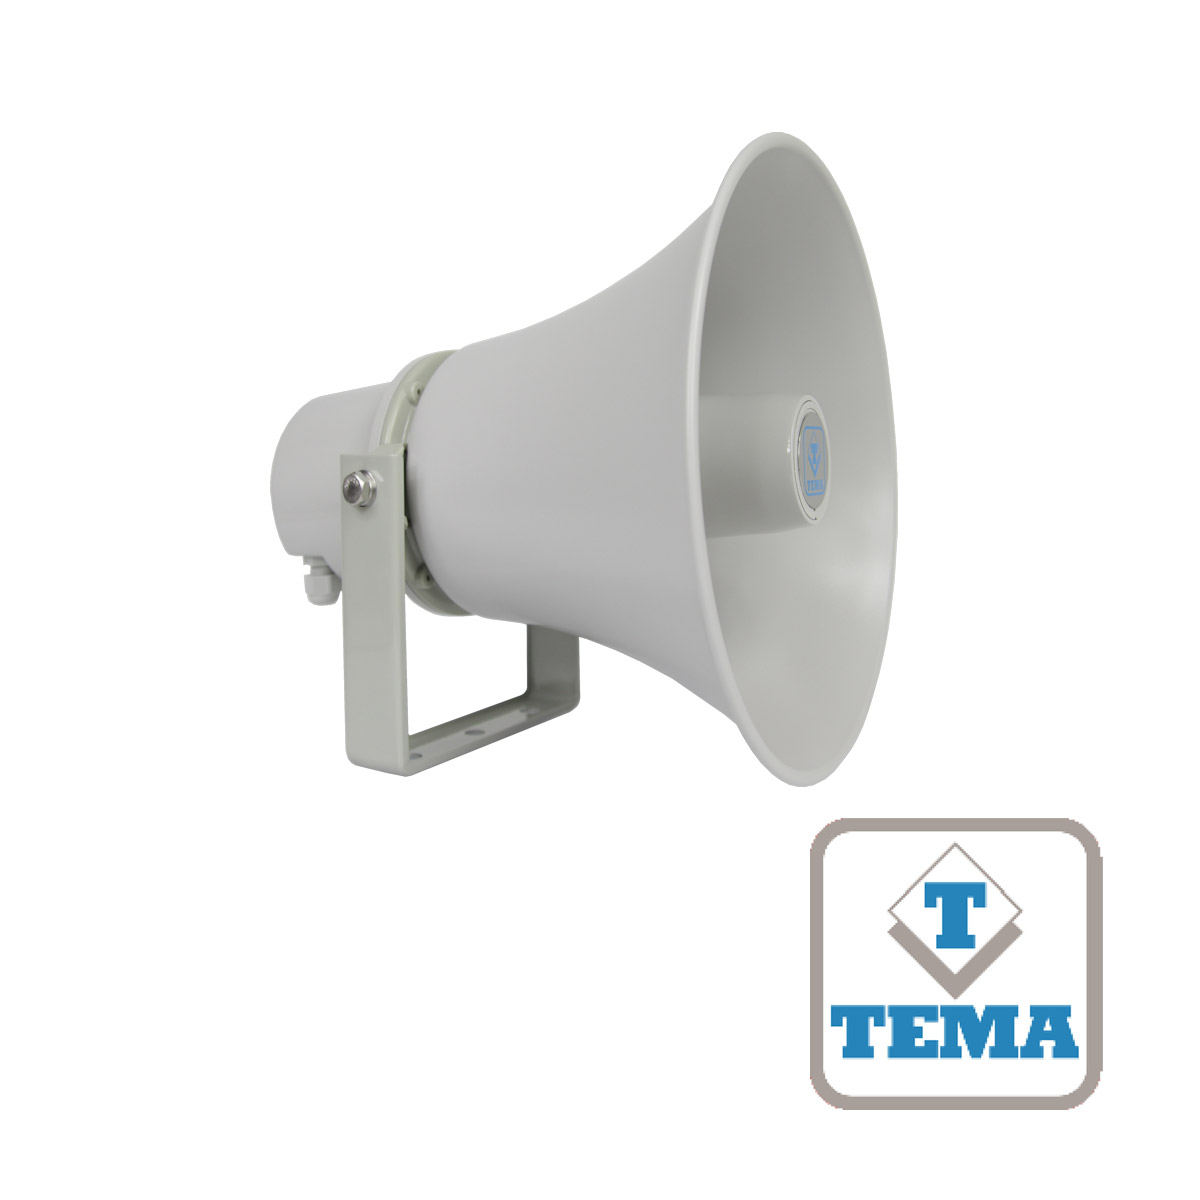 Tema Voip Speaker Systems